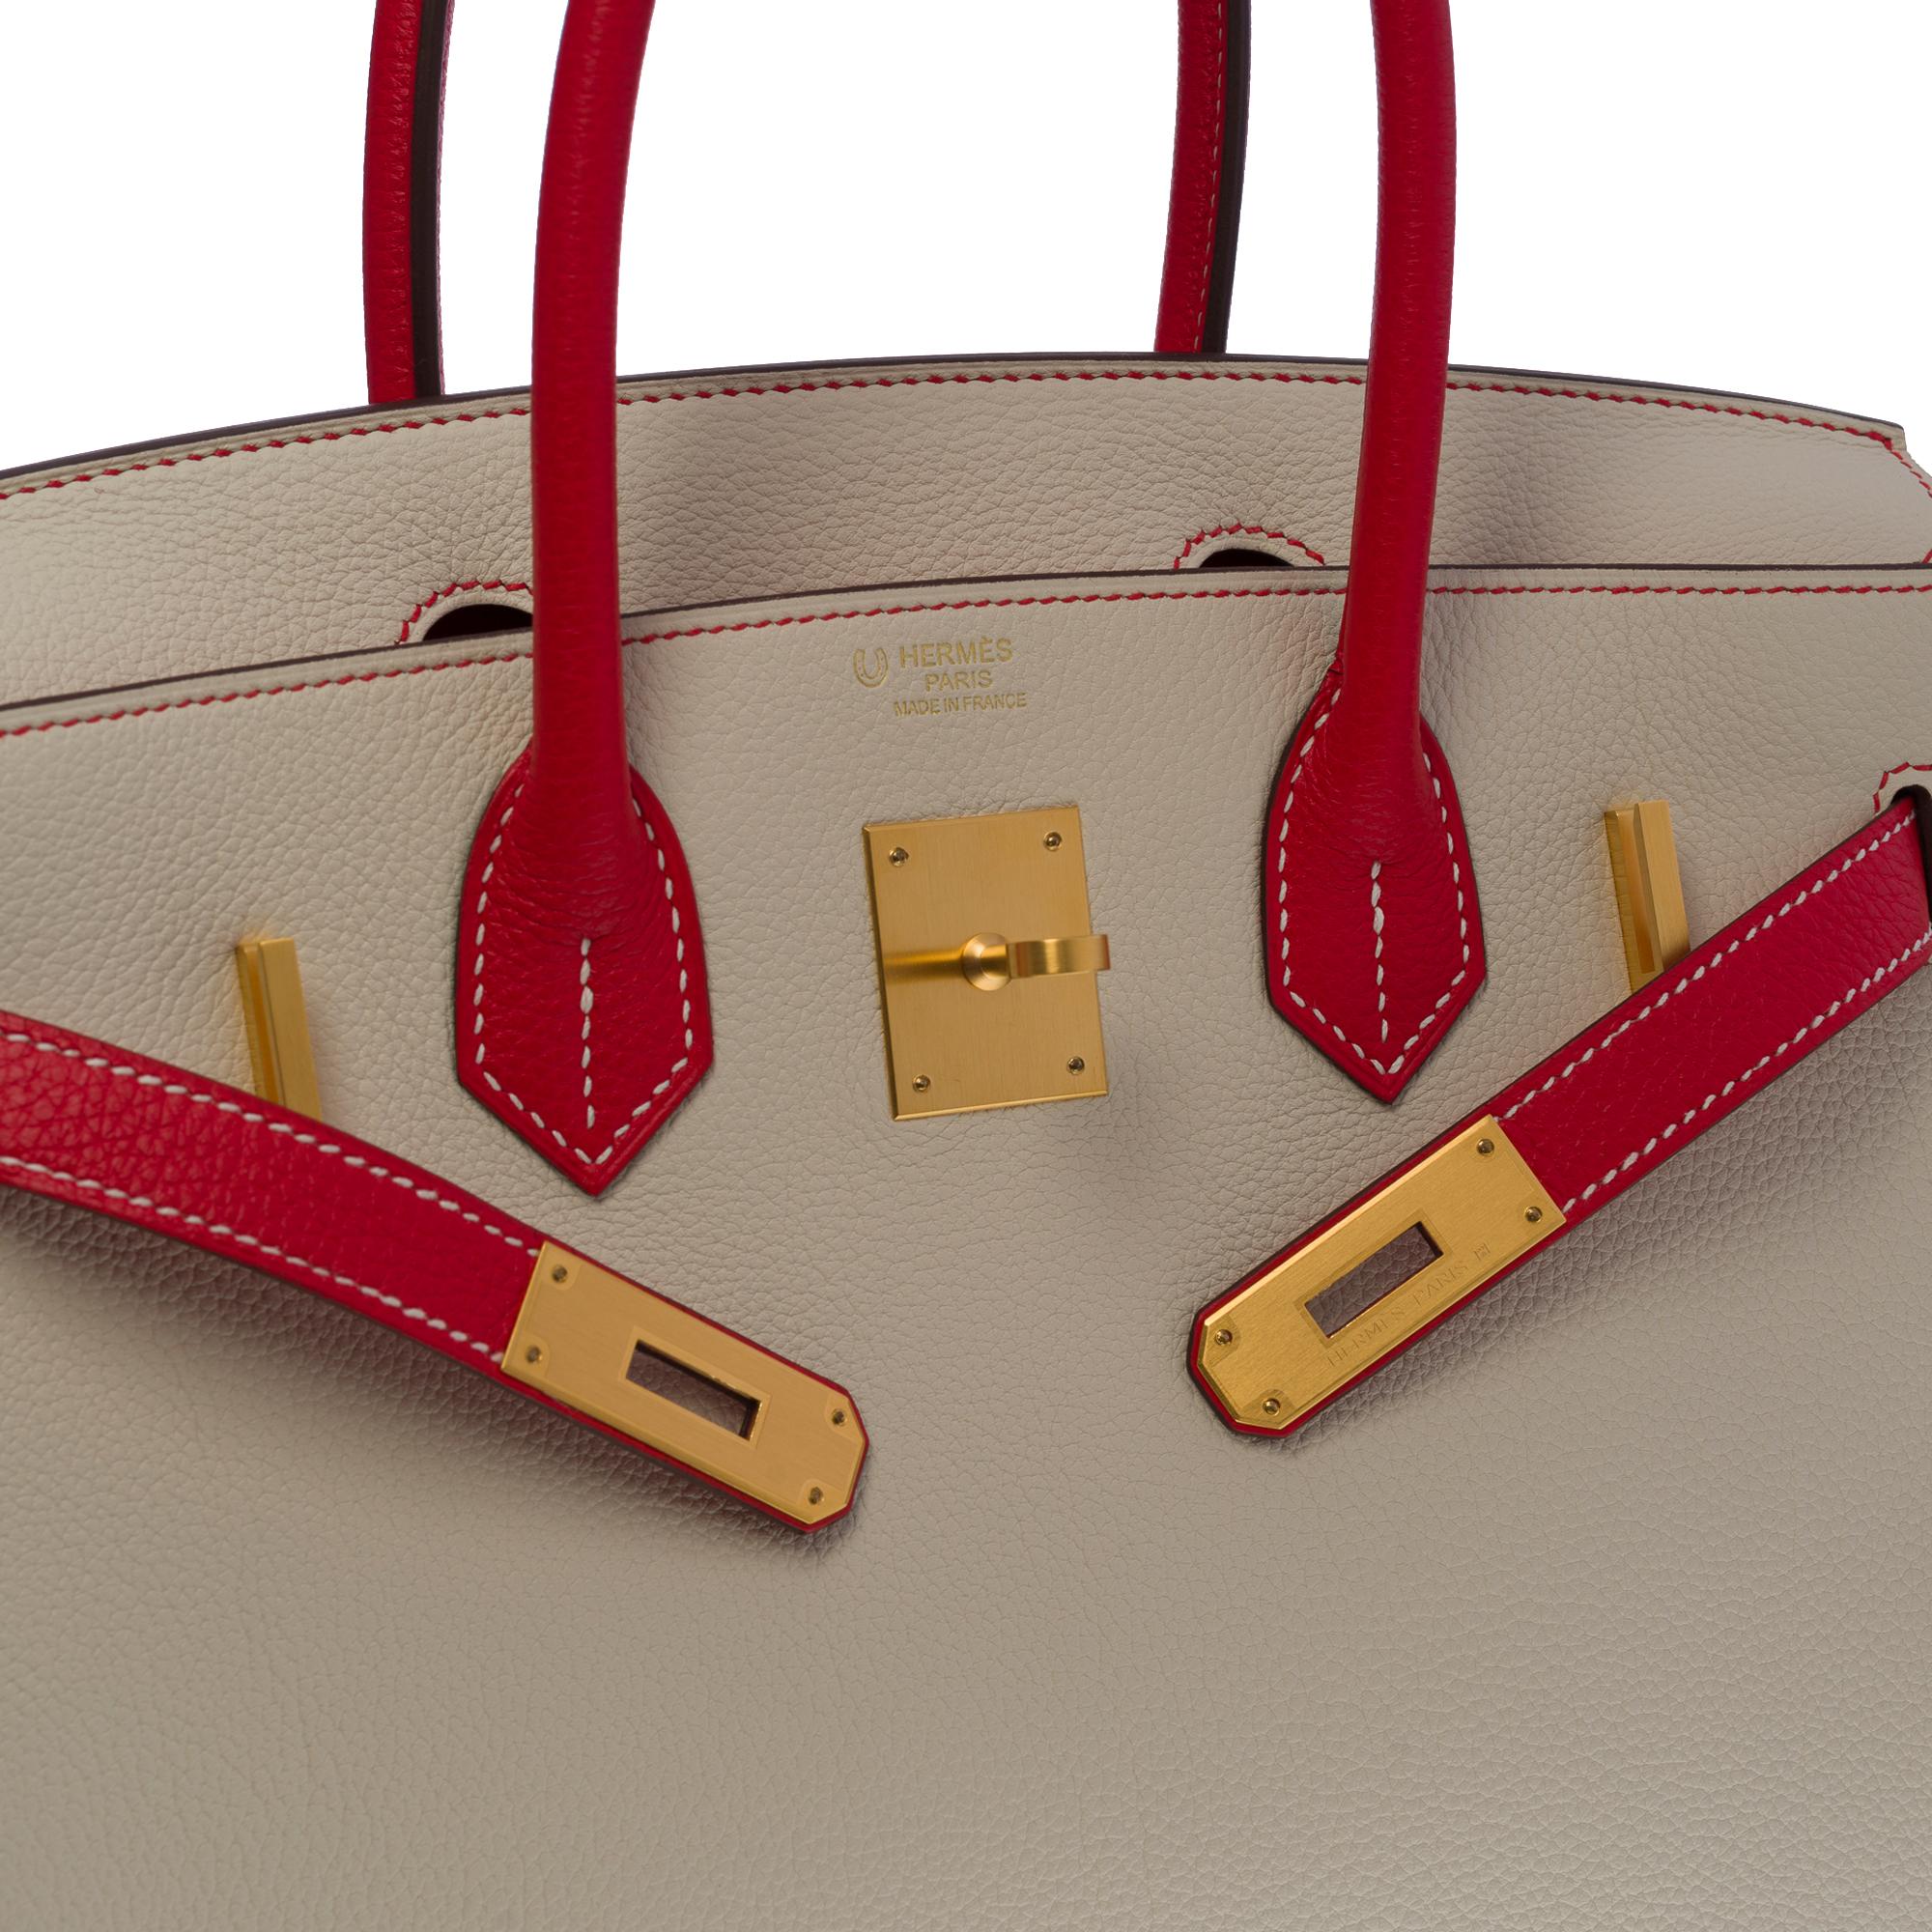  Hermès Birkin 30 HSS Special Order handbag in Craie/Red Togo leather, PHW 1